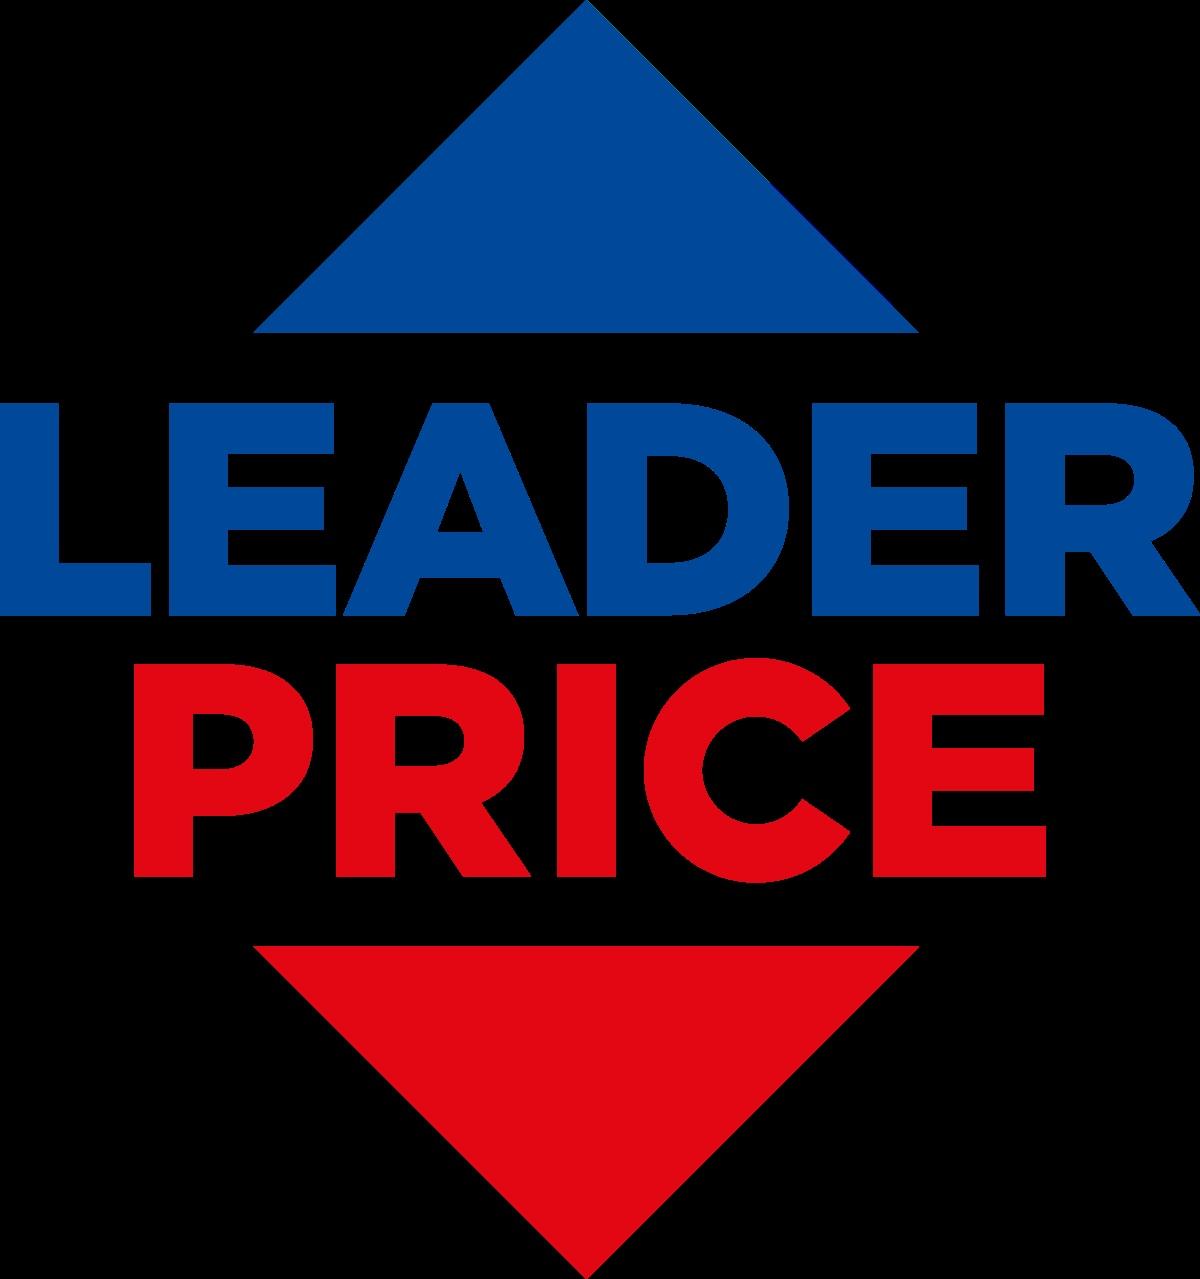 Leader Price Sées